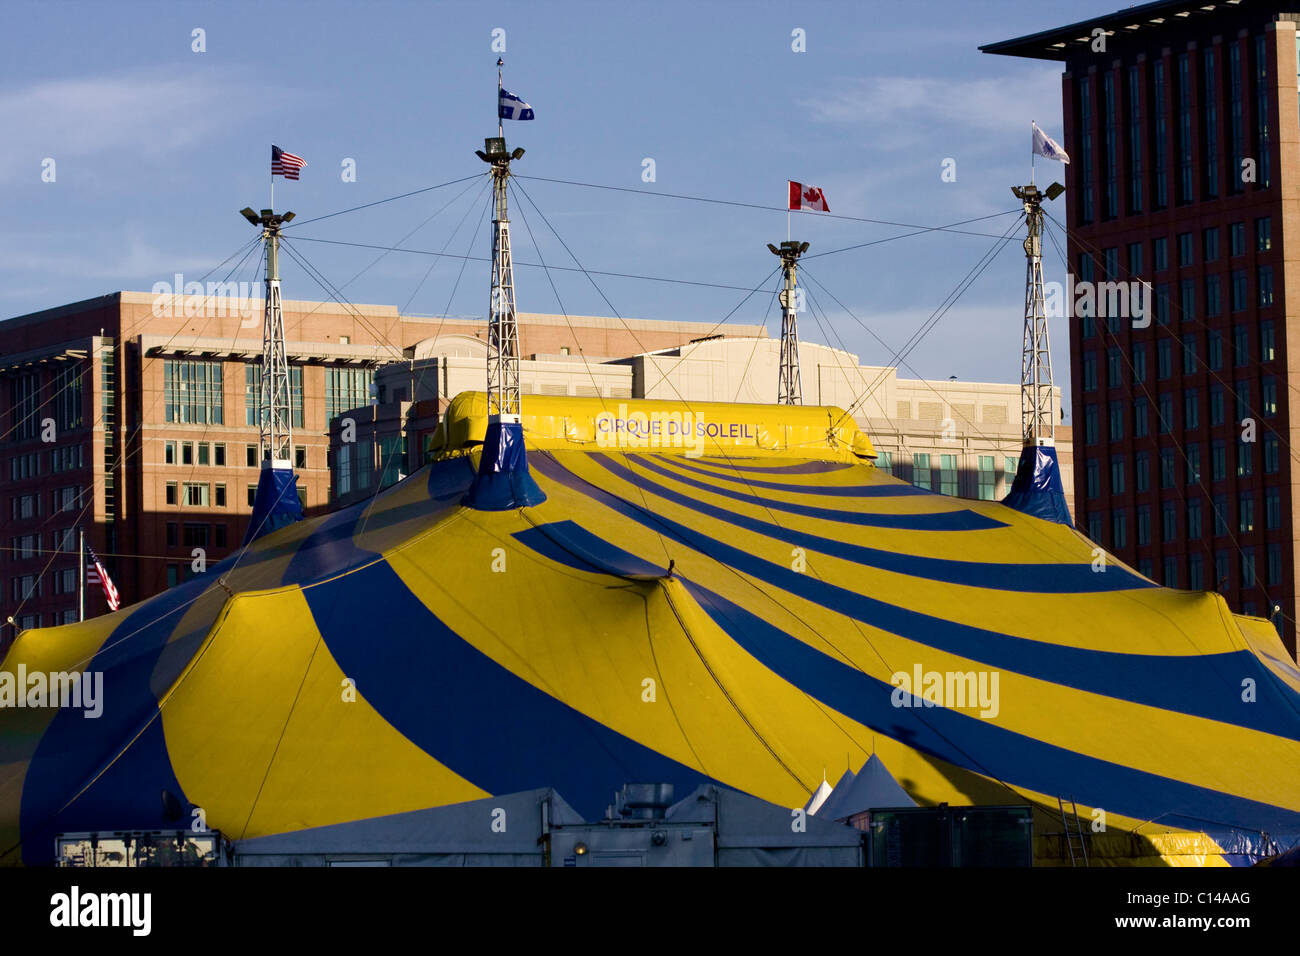 Cirque Du Soleil Tent at Fan Pier in Boston, Massachusetts Stock Photo